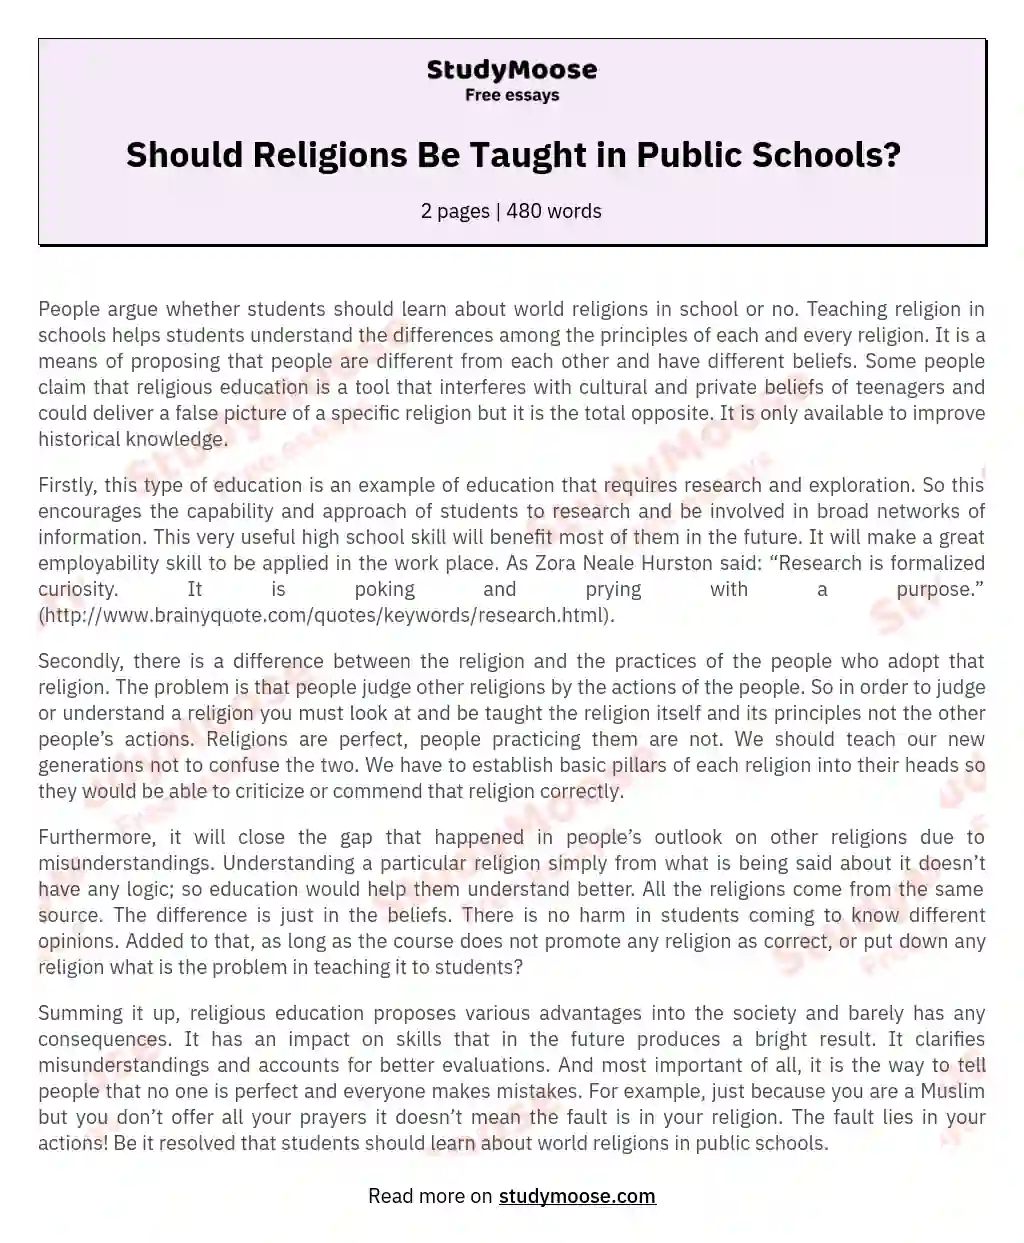 Should Religions Be Taught in Public Schools? essay